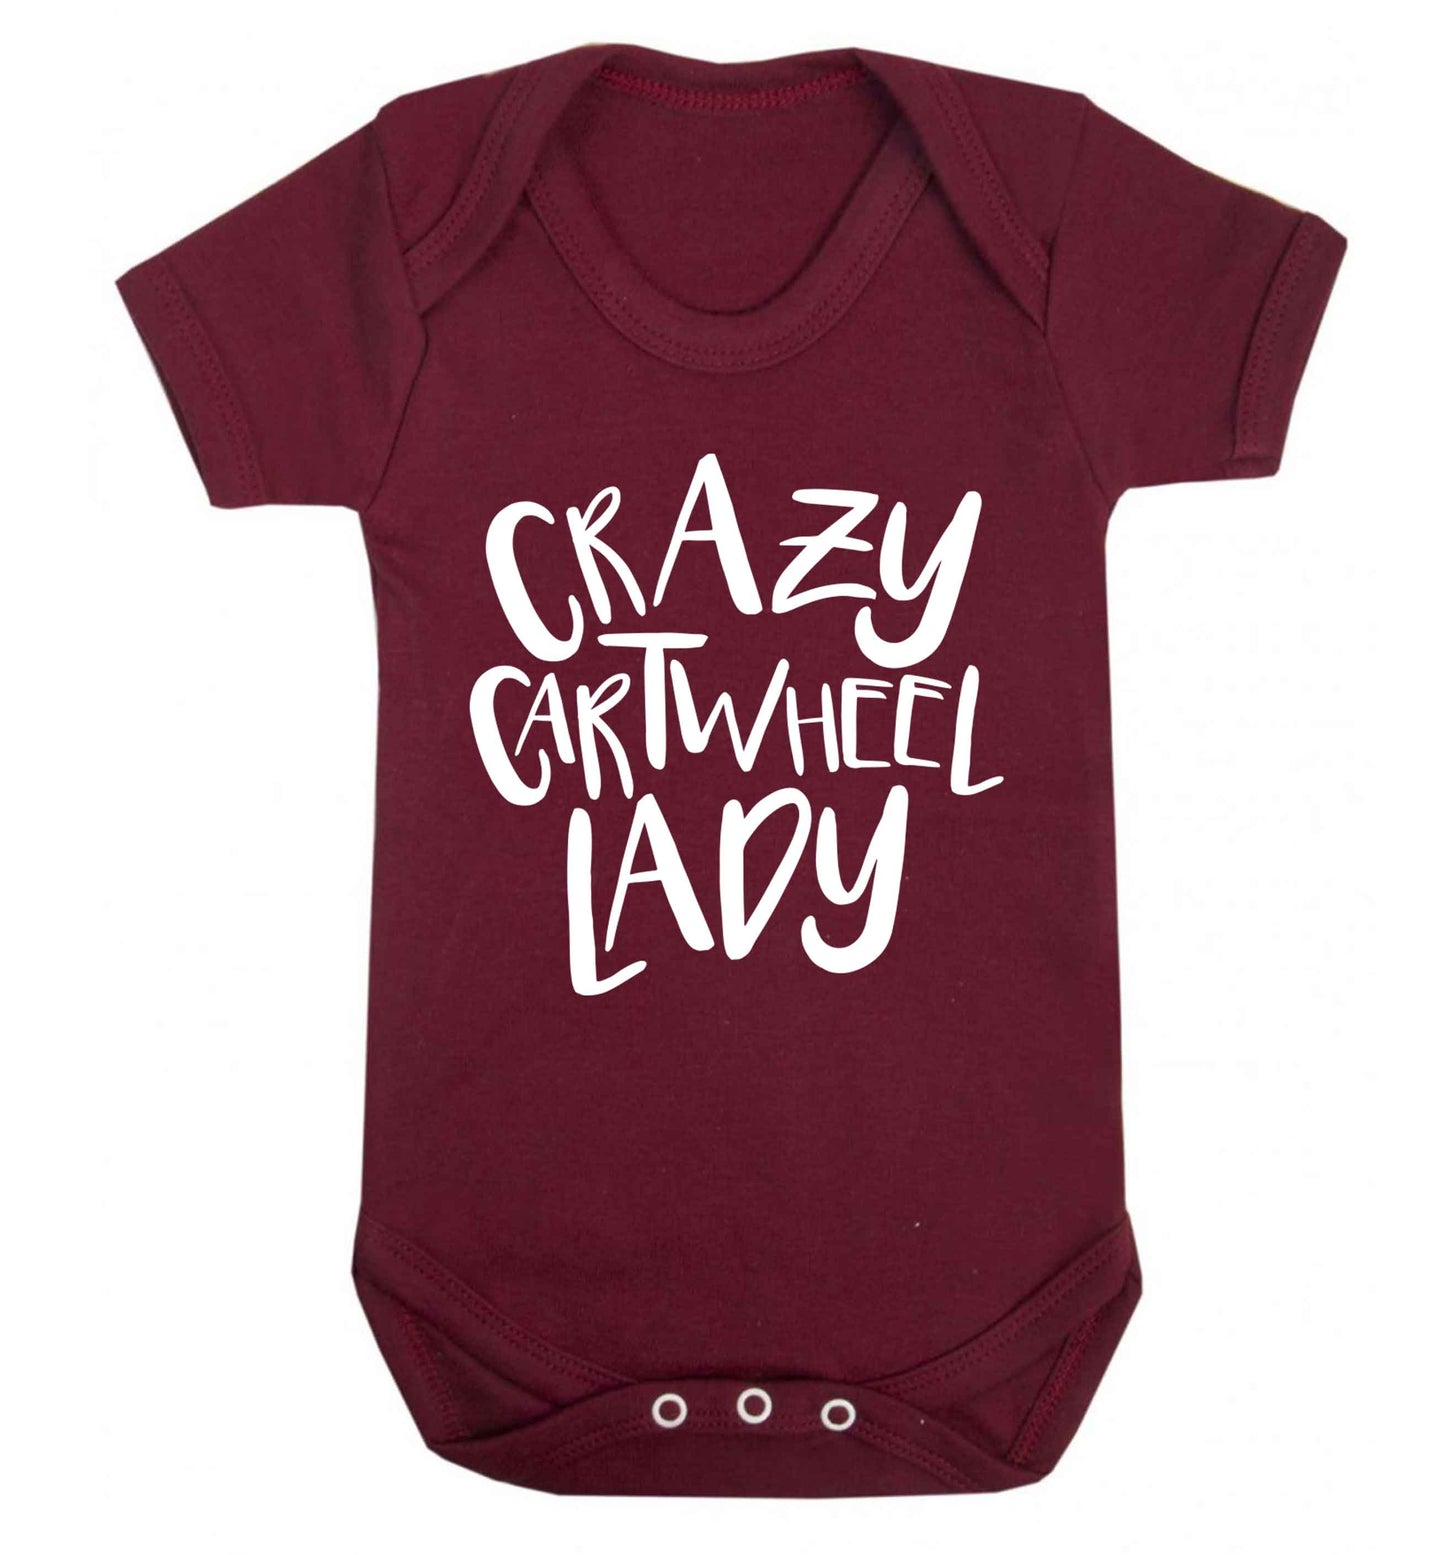 Crazy cartwheel lady Baby Vest maroon 18-24 months